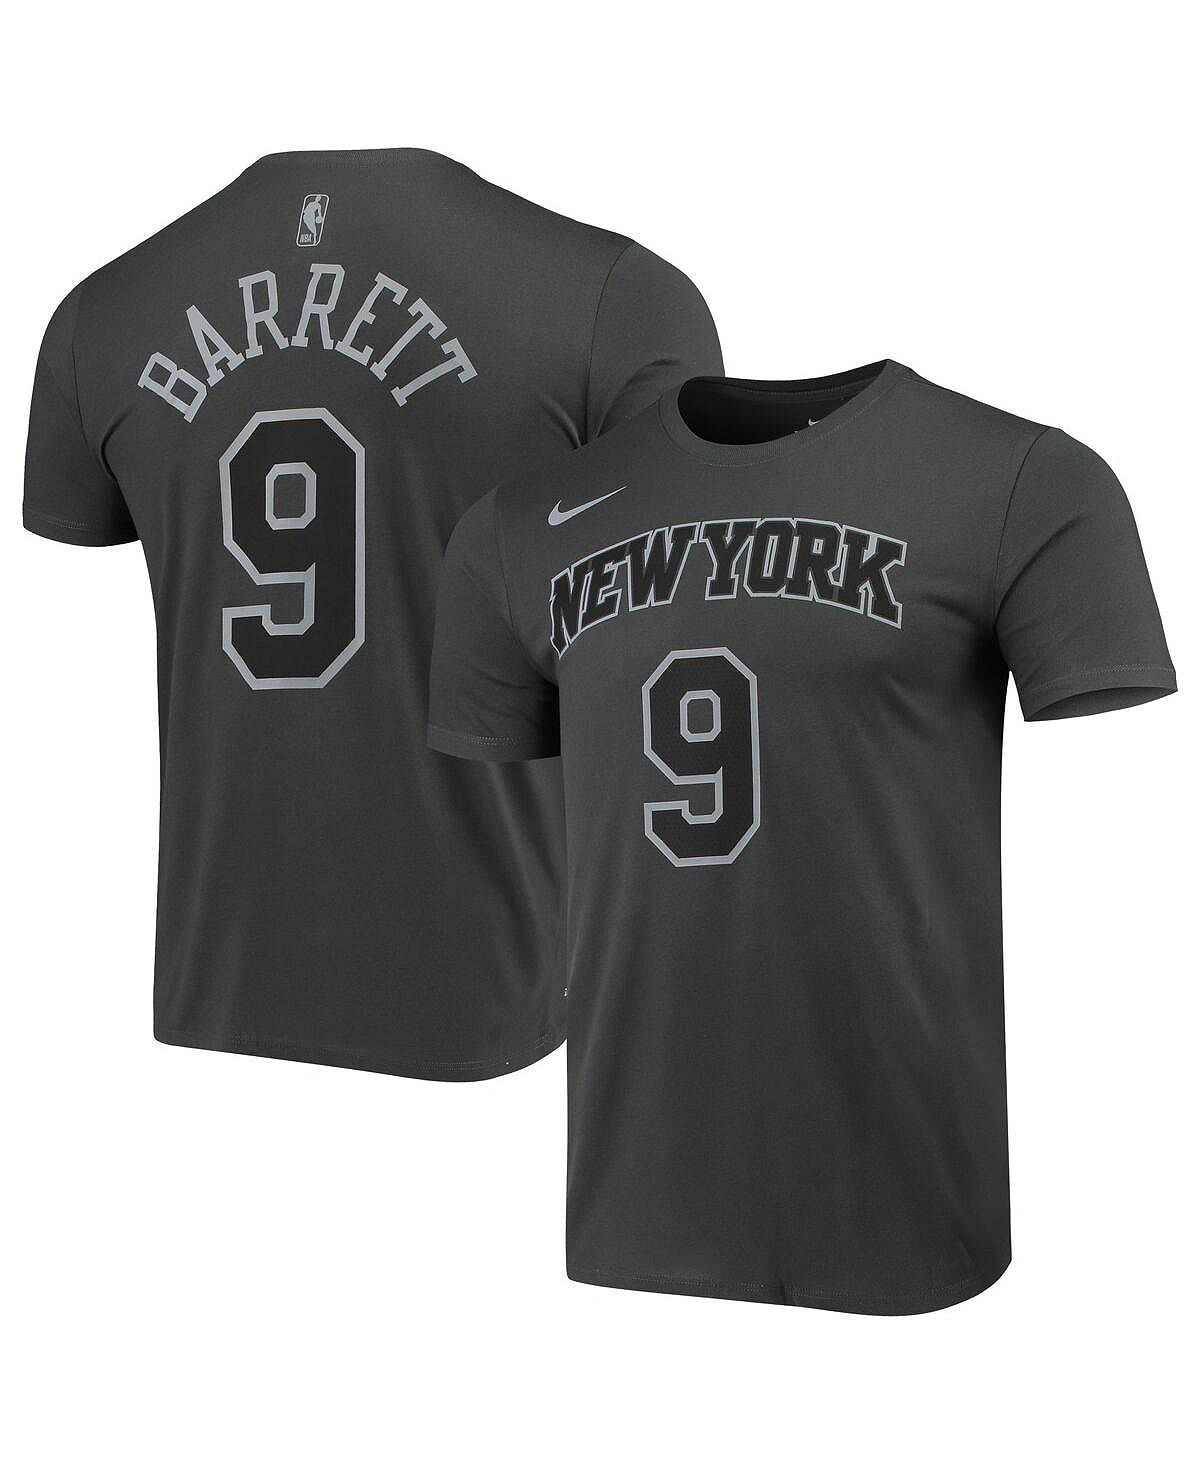 Мужская футболка rj barrett grey new york knicks icon performance Nike, серый эпизоды из жизни эллен уайт никс дж р